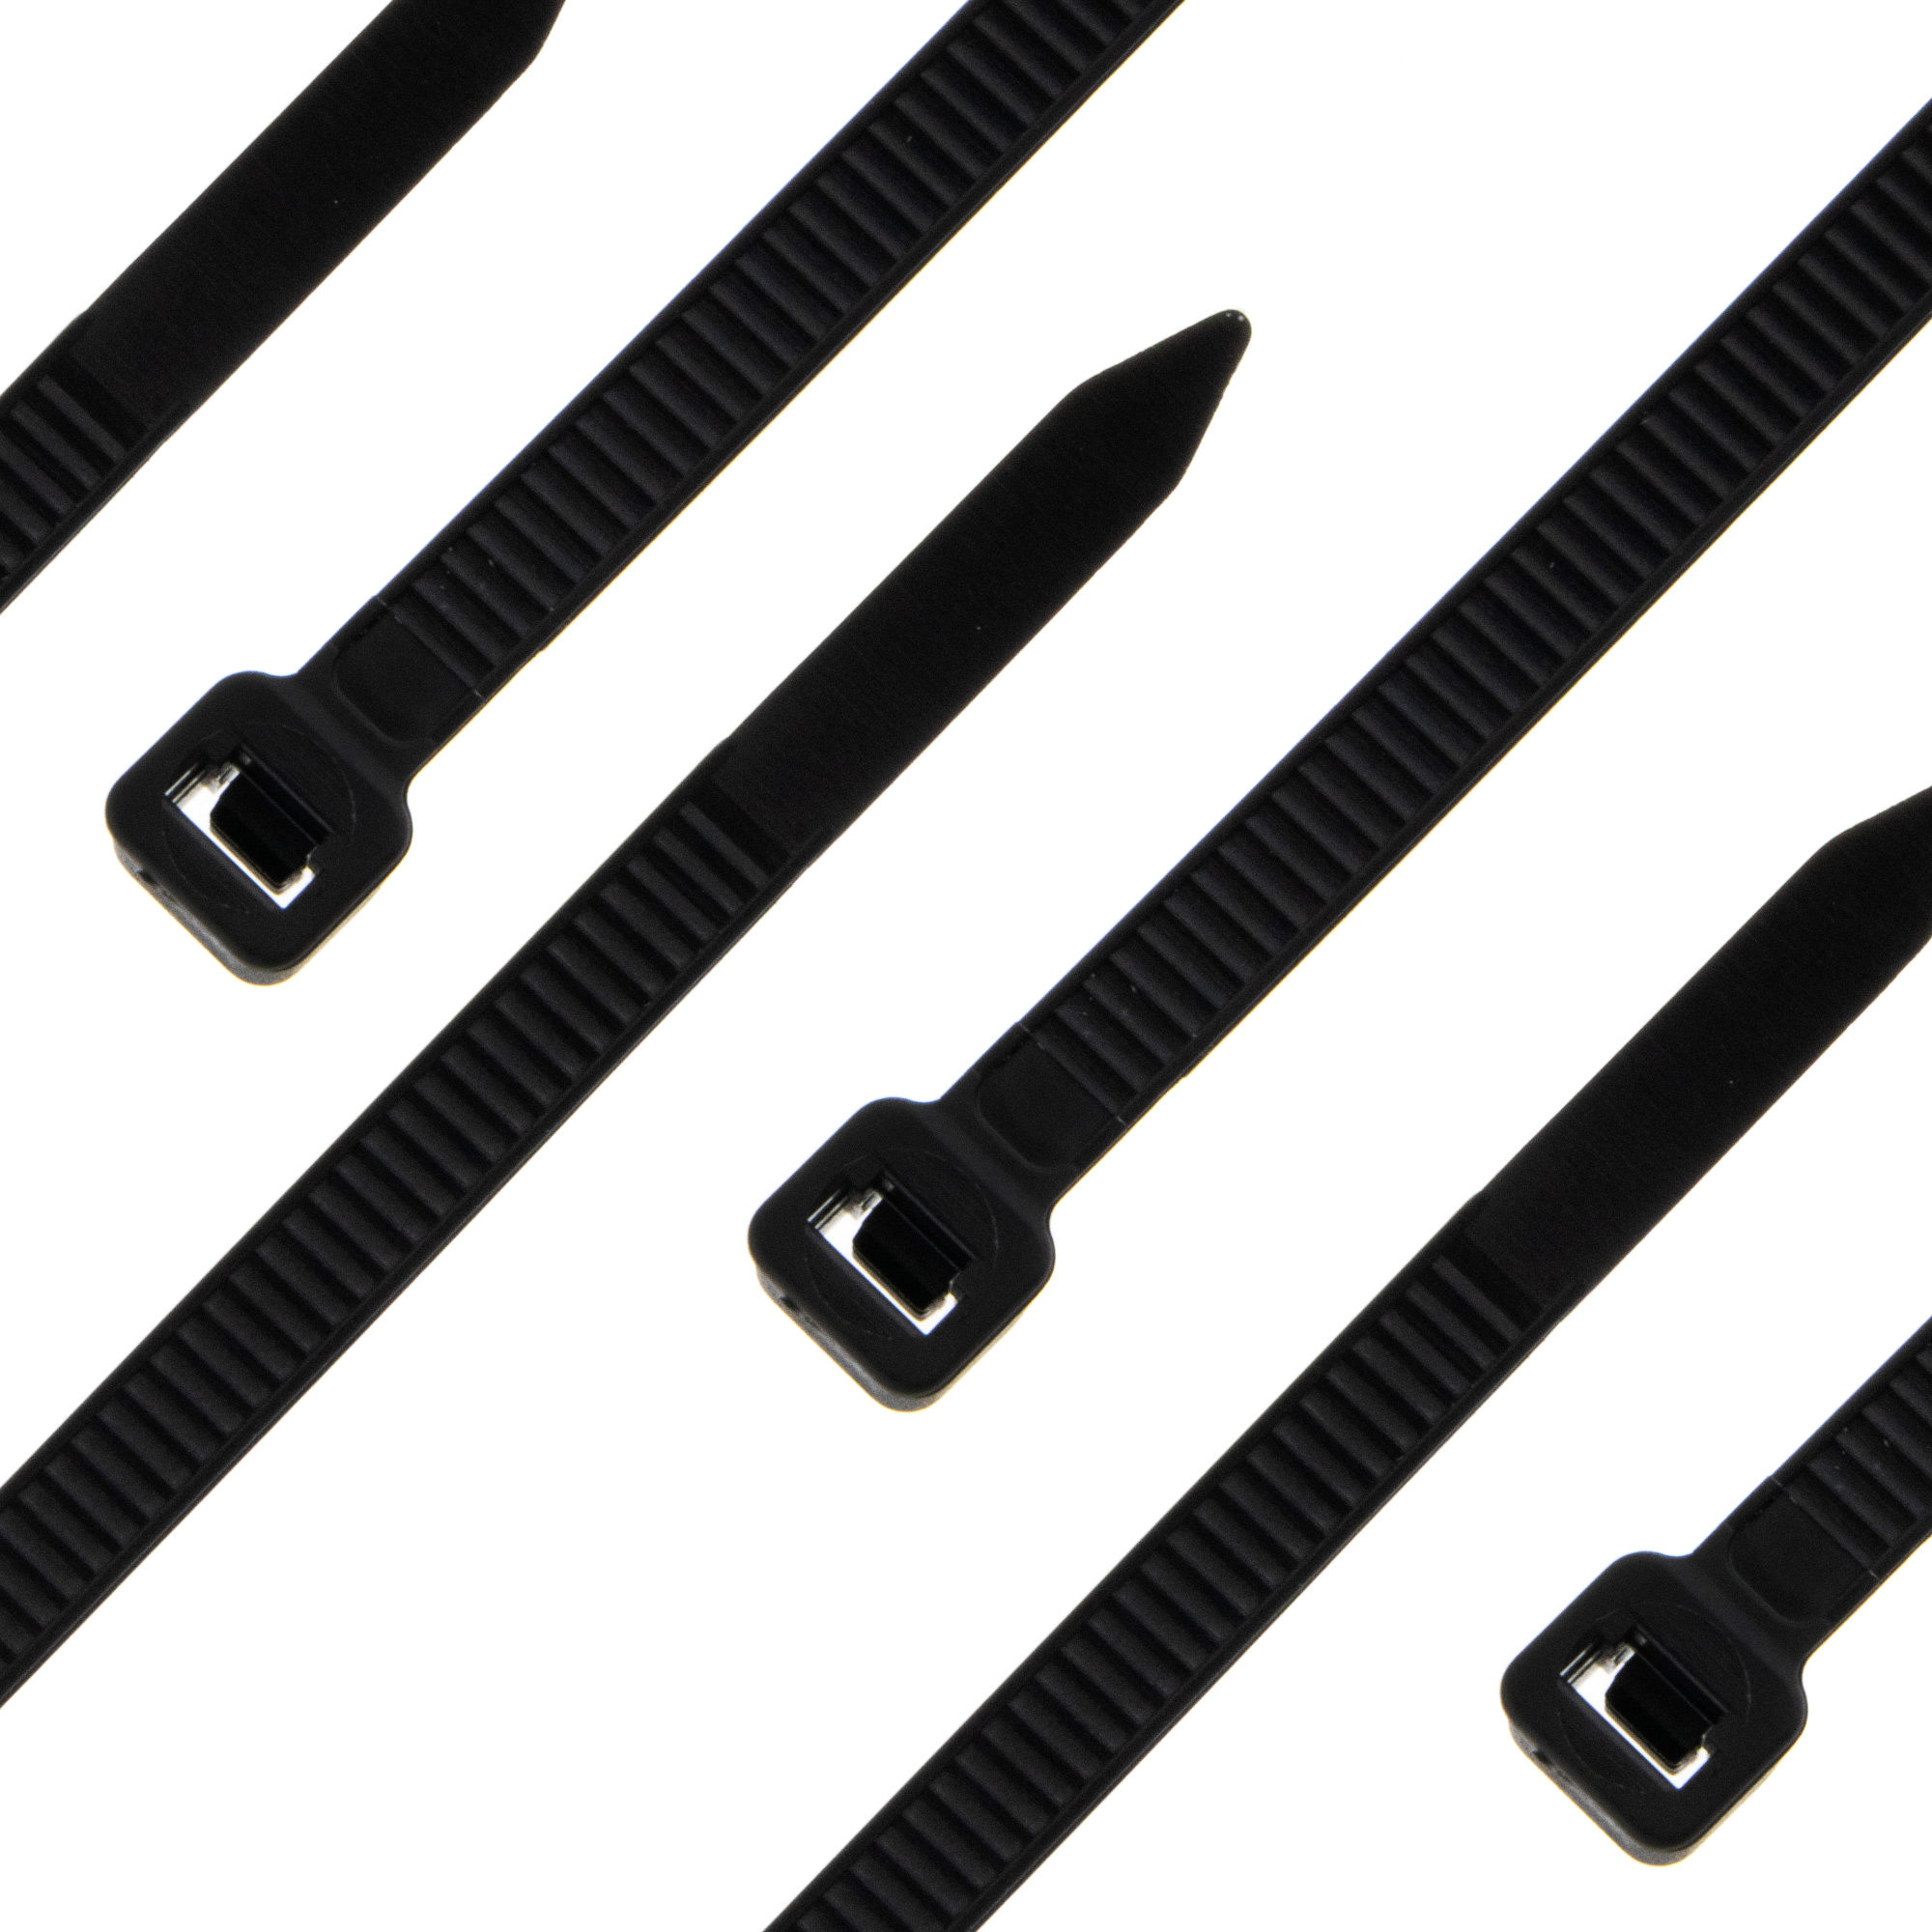 Cable tie self-locking 200 x 4,8mm, black, 100PCS